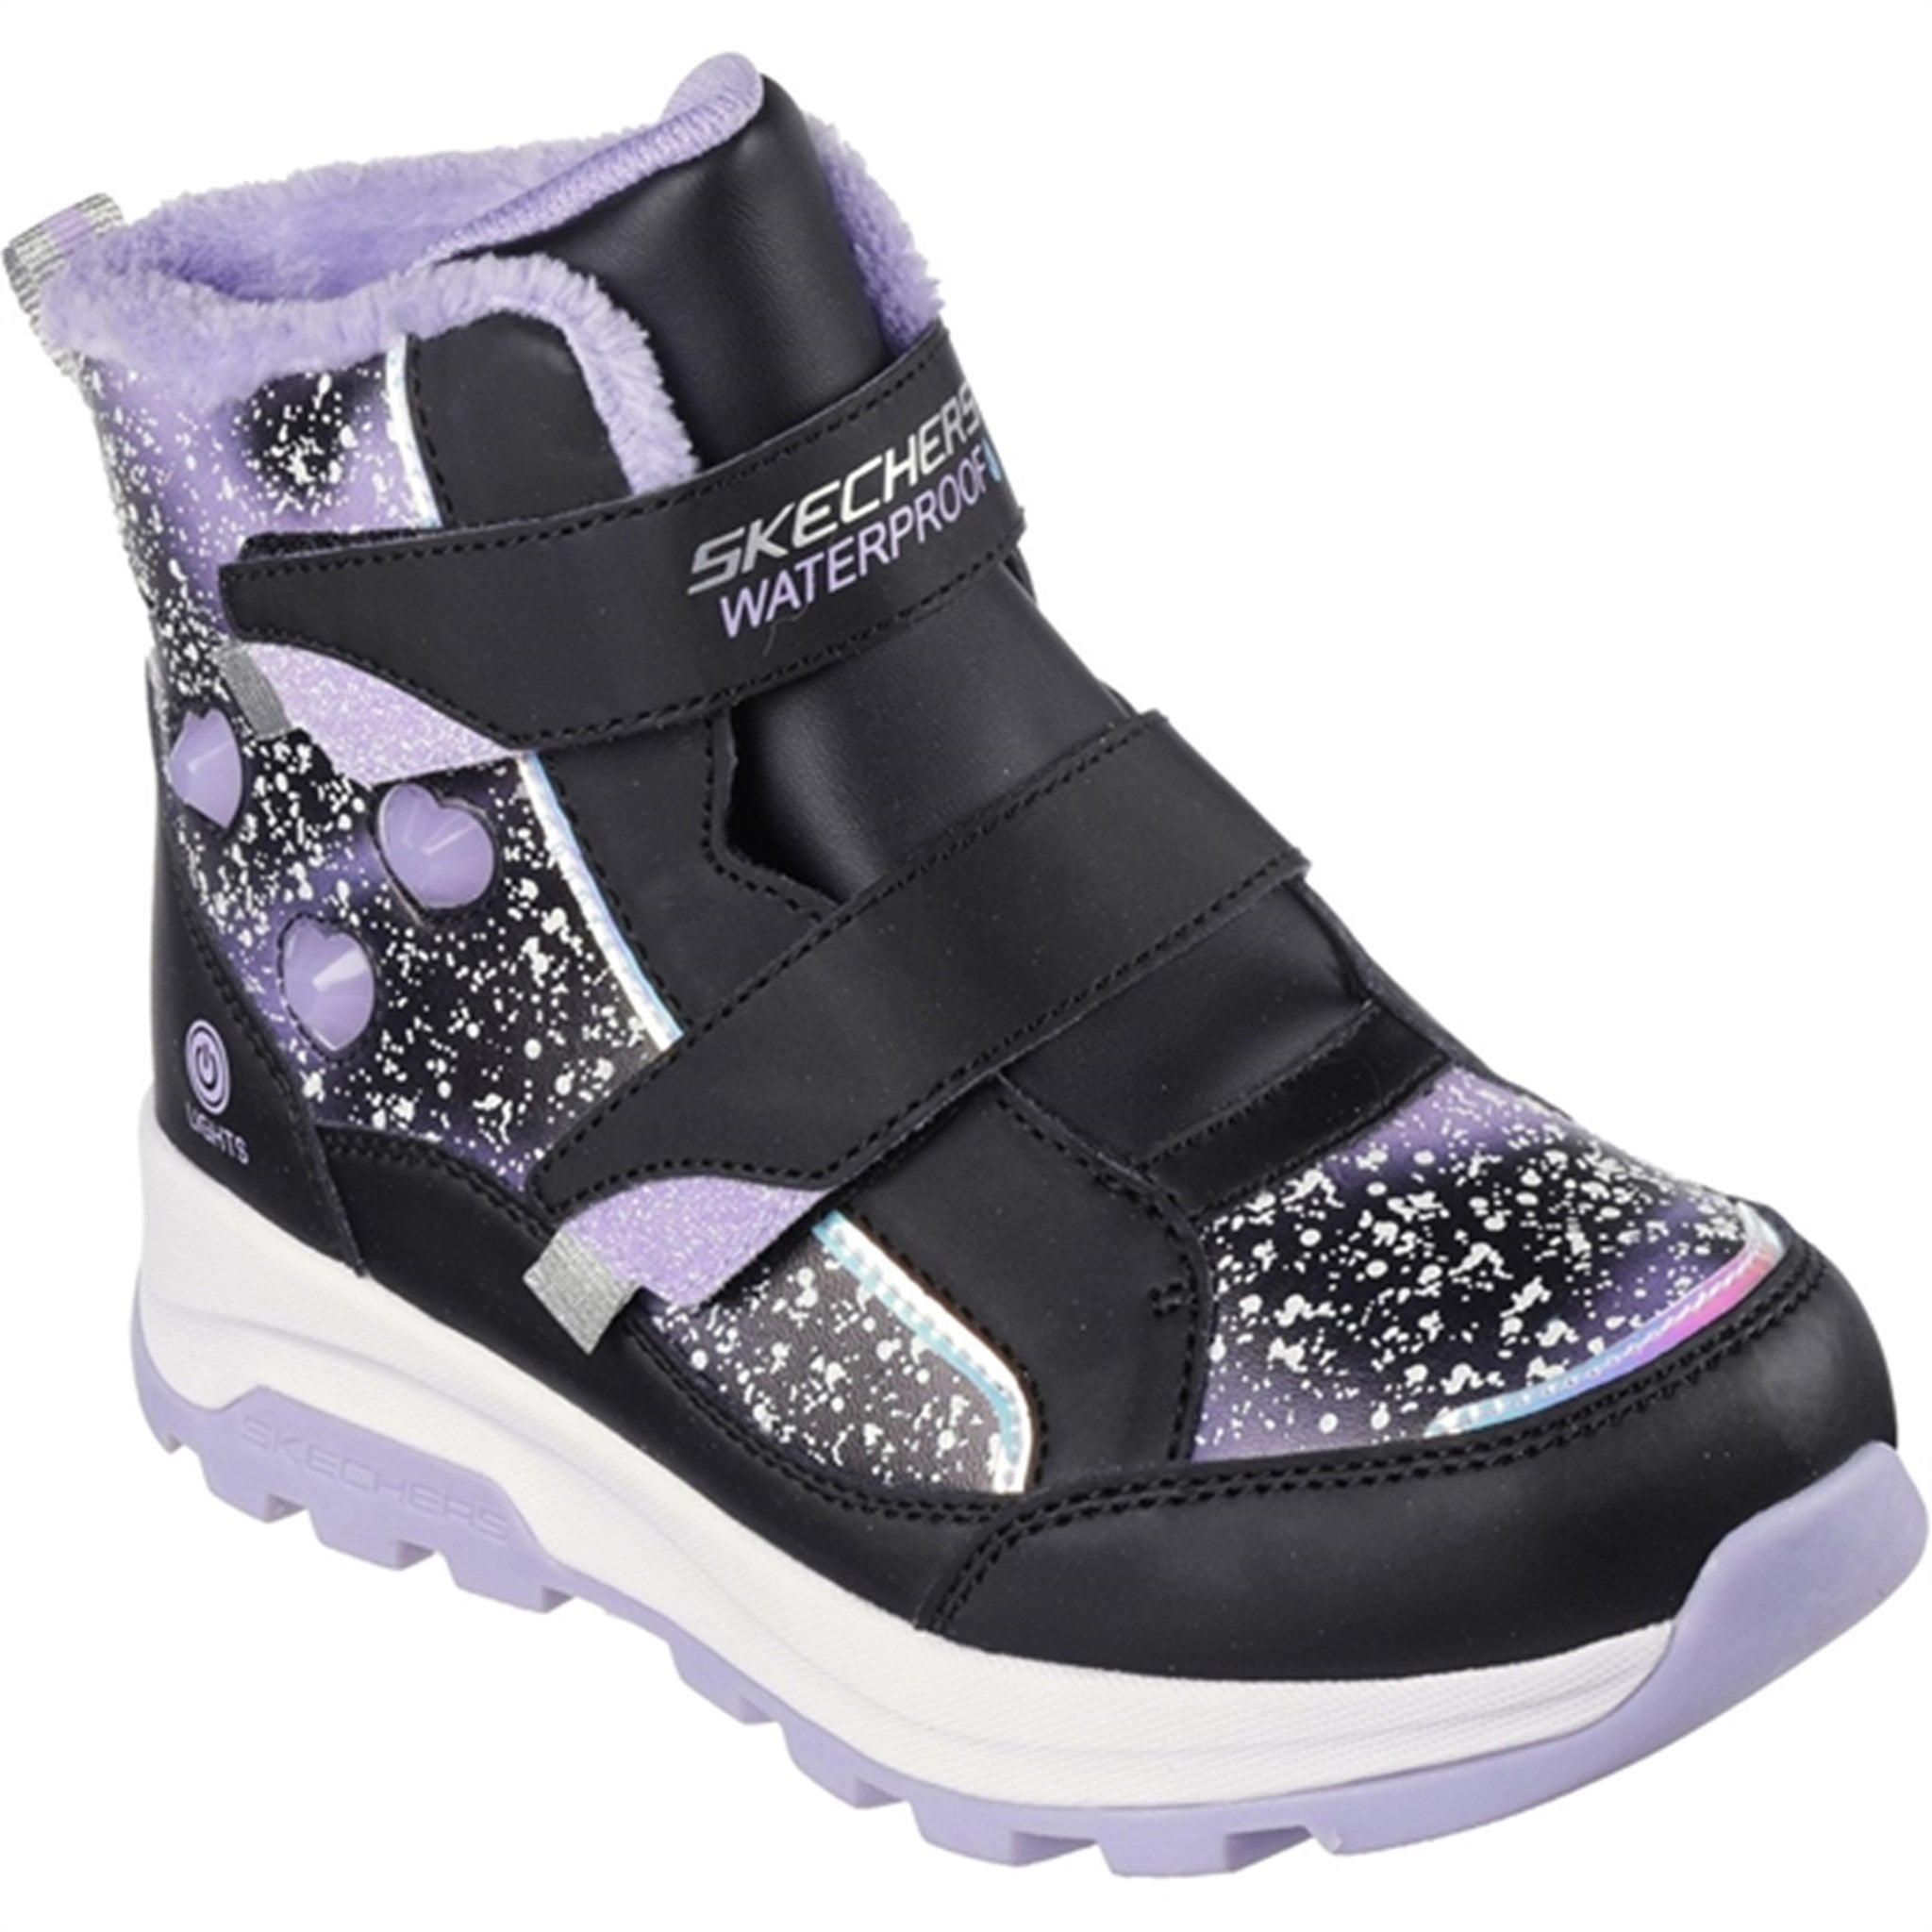 Skechers Girls Storm Blazer Waterproof Boots Black Lavender